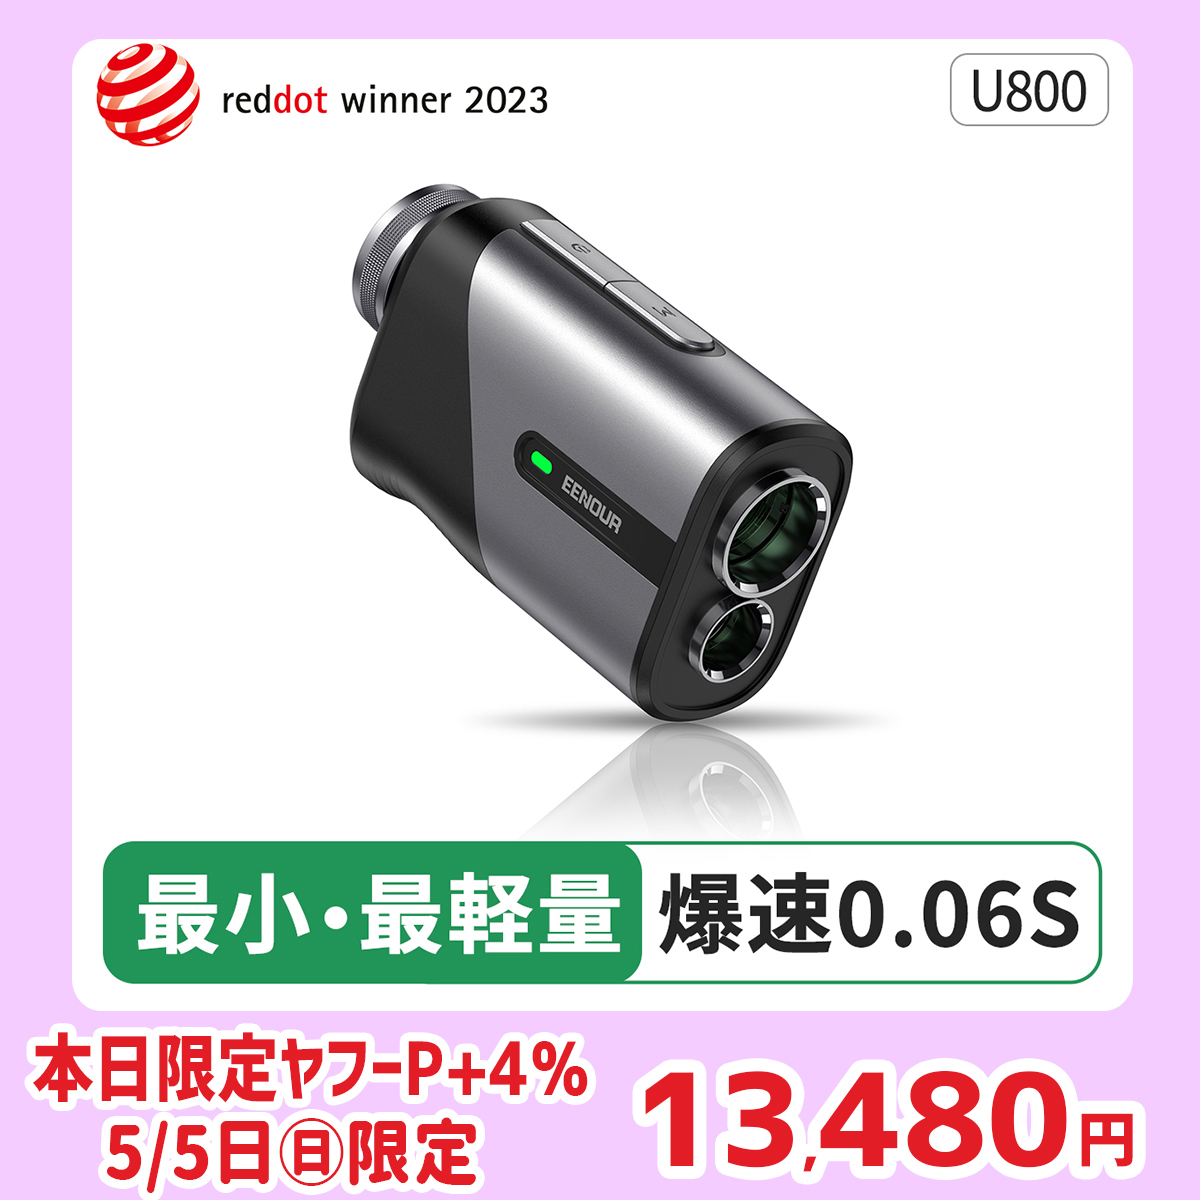 EENOUR U800 レーザー距離計の商品画像